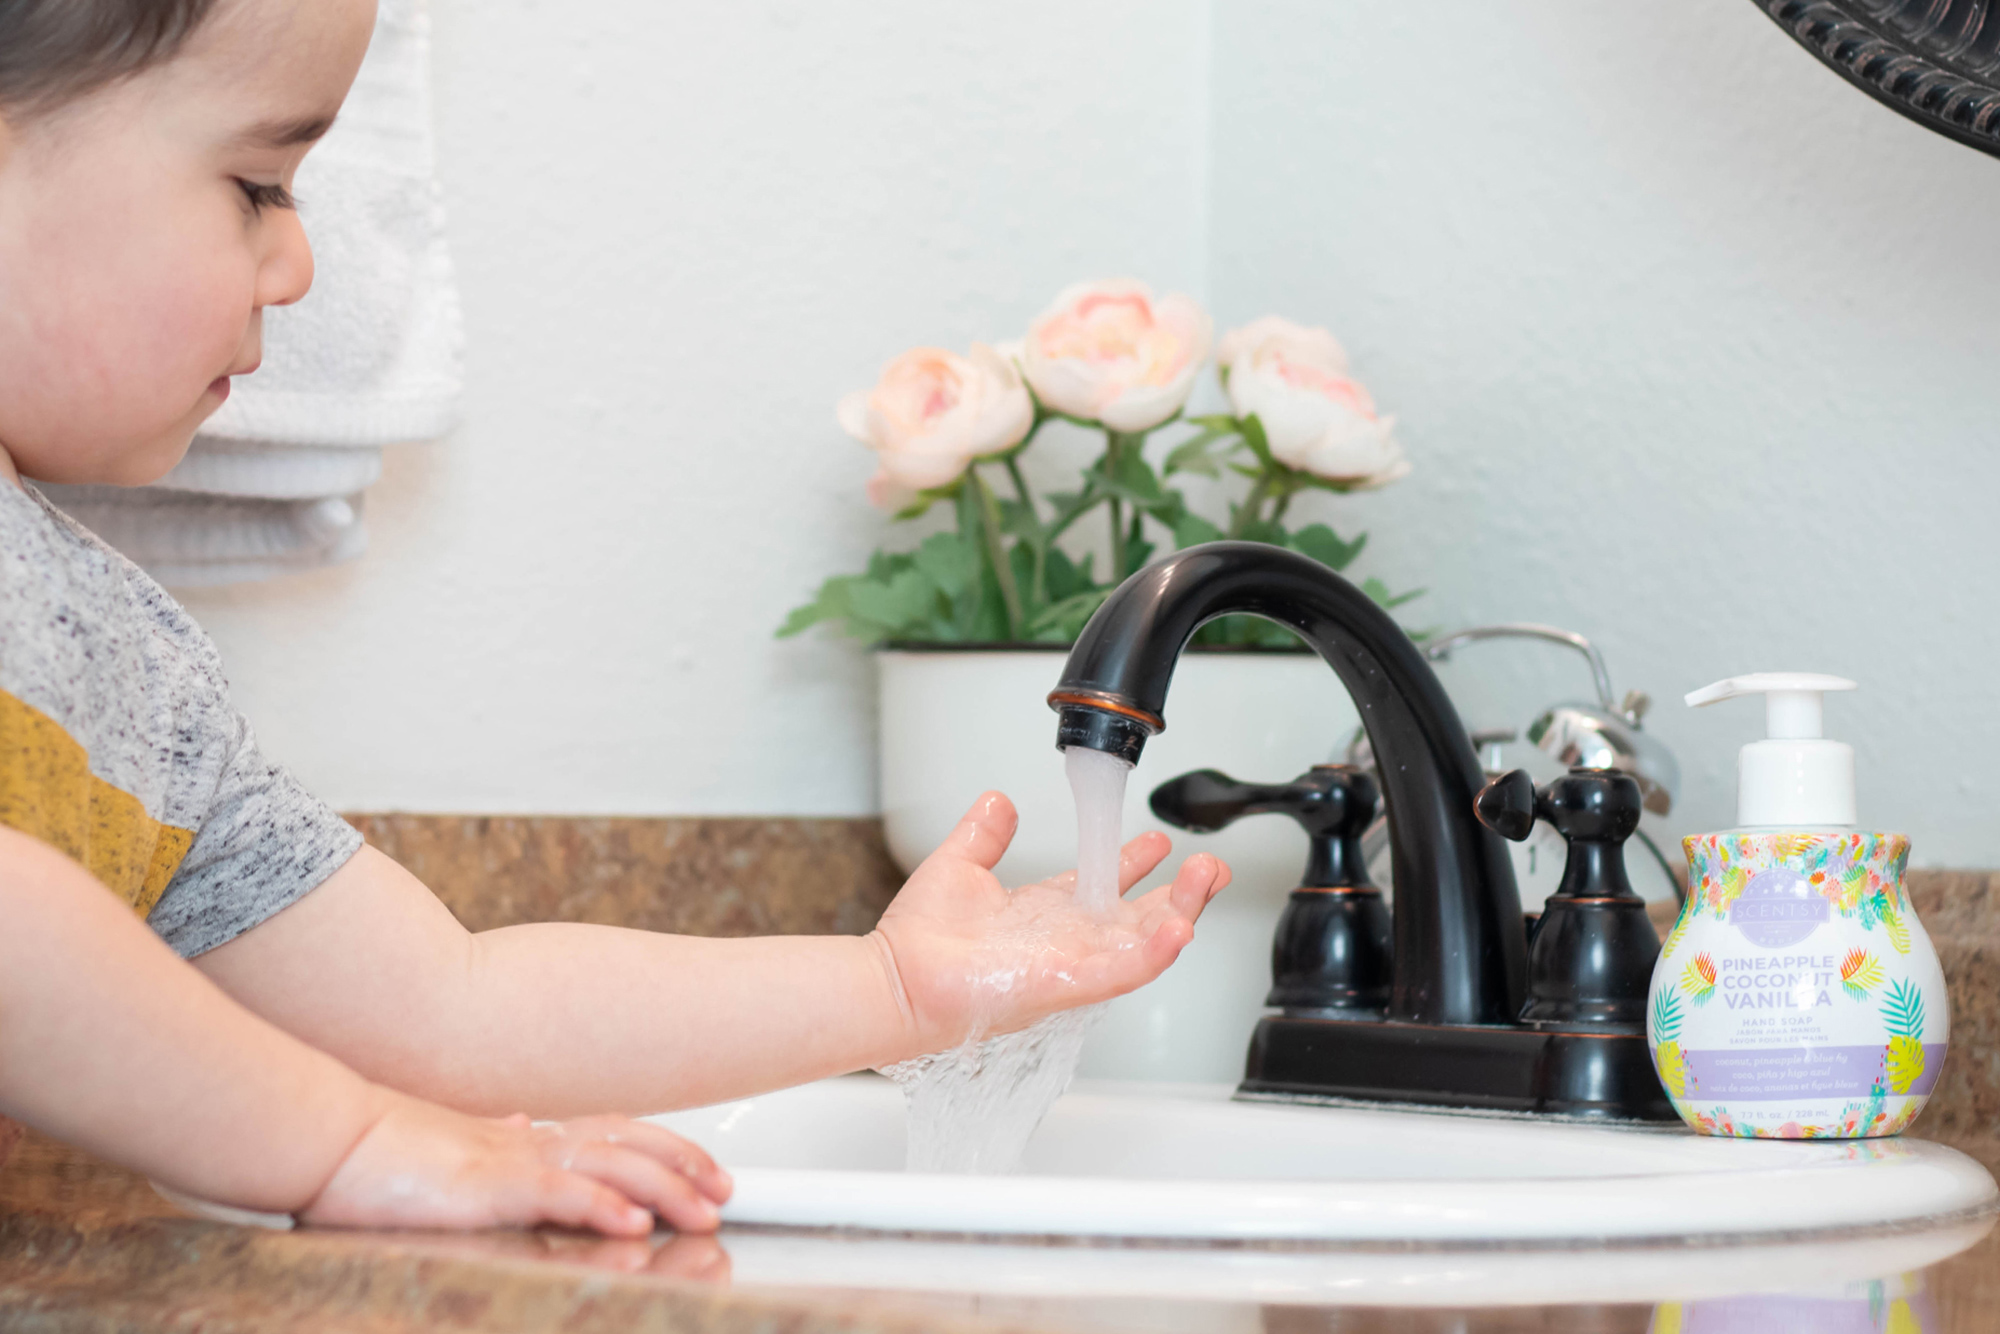 Ways to make hand-washing fun for kids